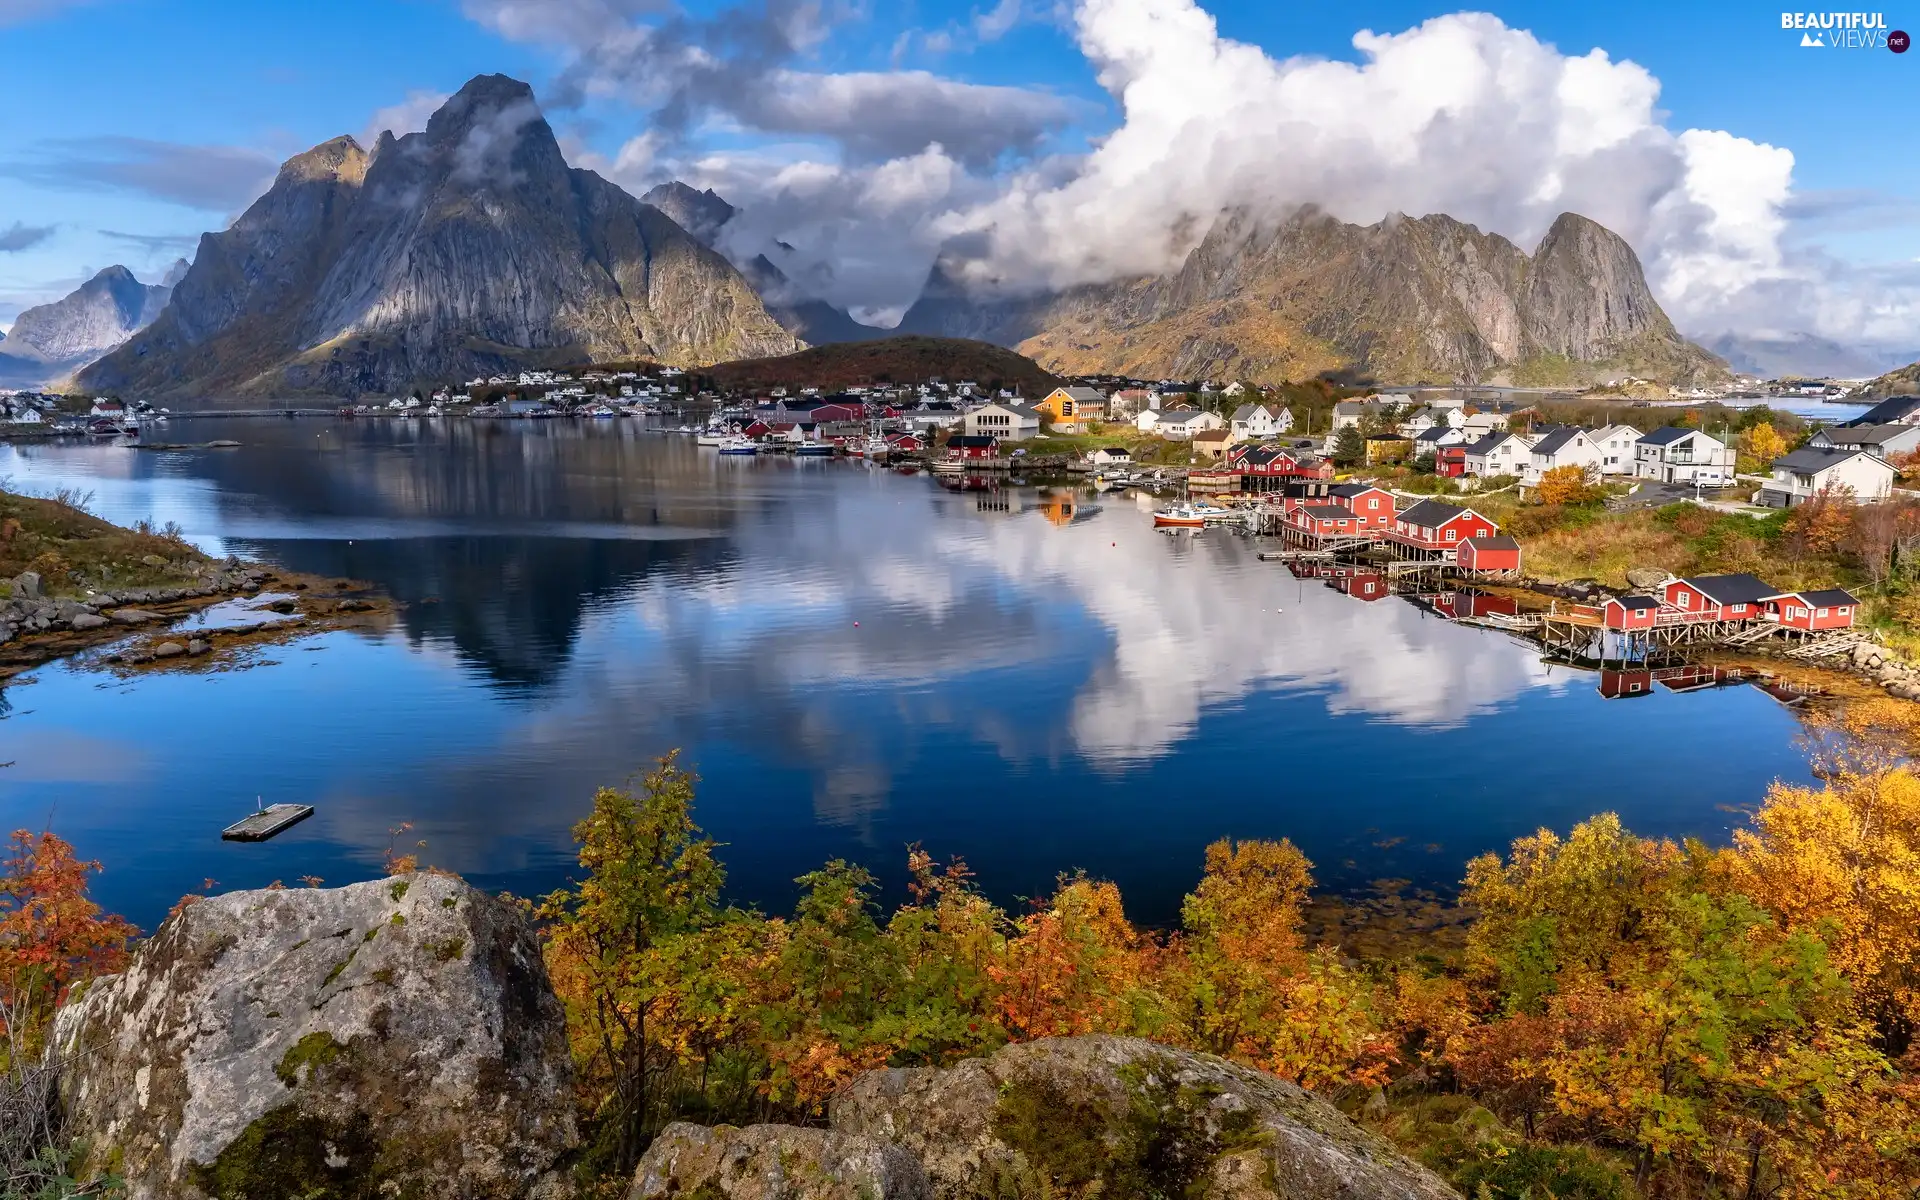 Mountains, Lofoten, Reine Village, autumn, Norwegian Sea Rocks, Norway, Moskenesoya Island, clouds, Bush, Houses